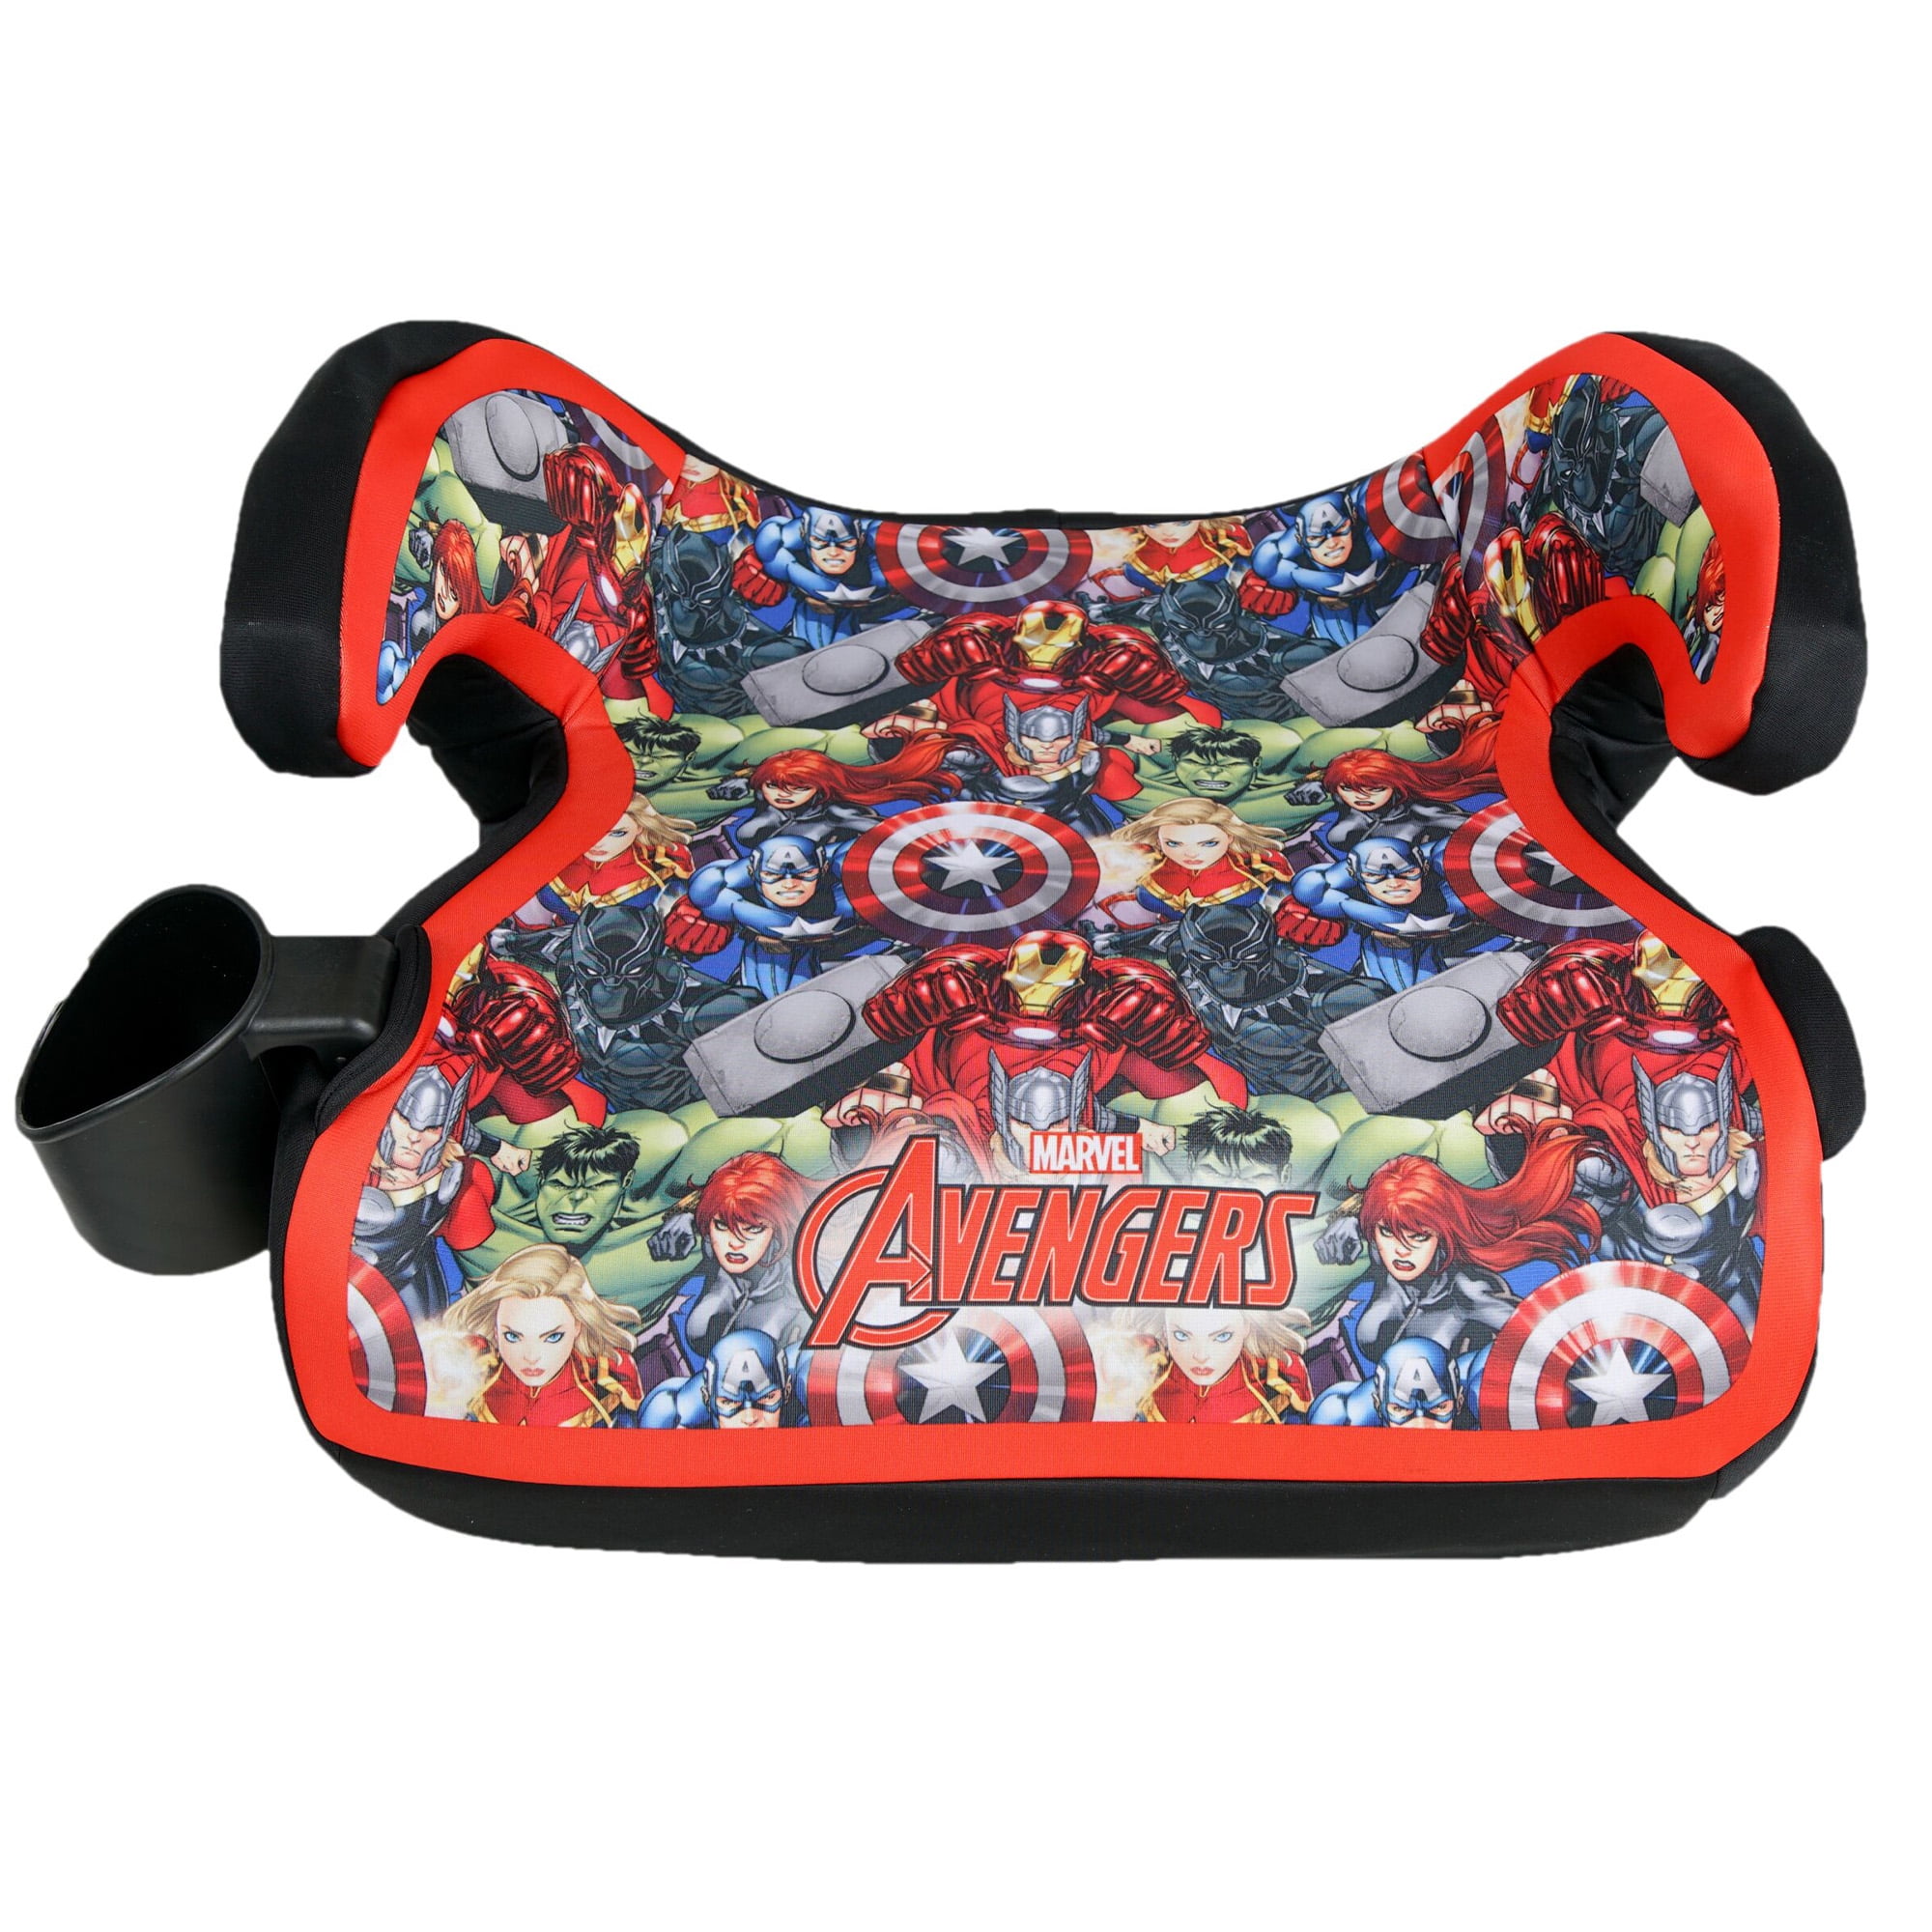 KidsEmbrace Backless Booster Car Seat, Marvel Avengers - Walmart.com ...